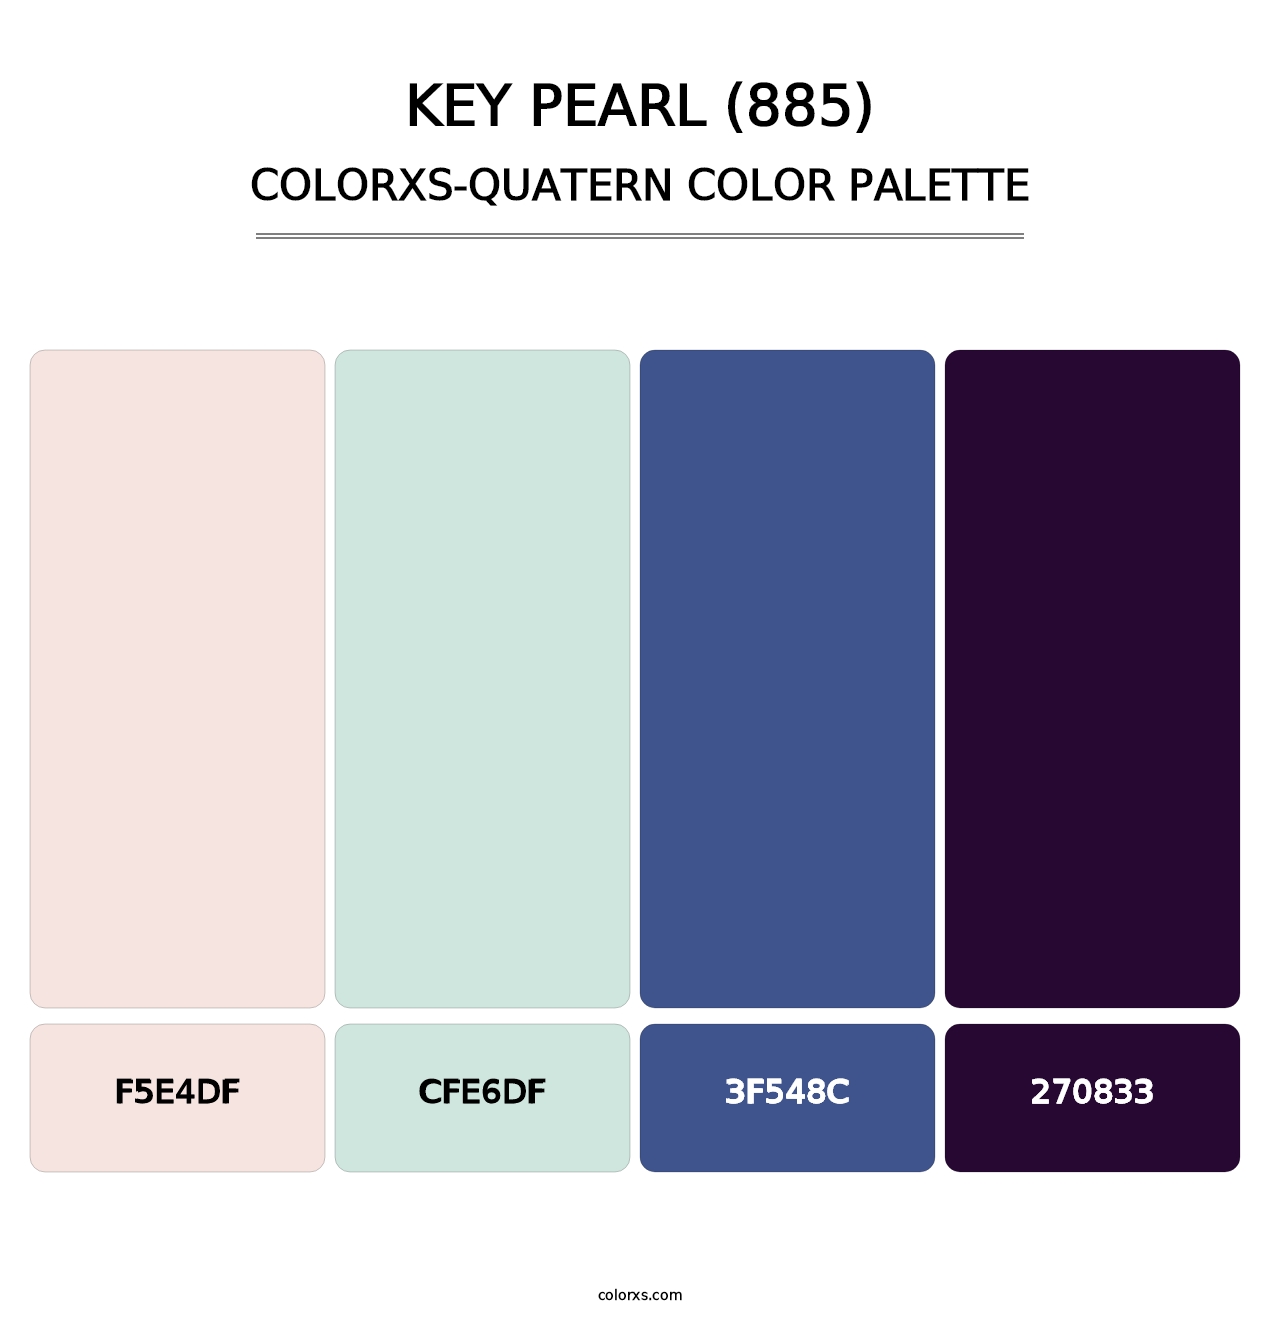 Key Pearl (885) - Colorxs Quatern Palette